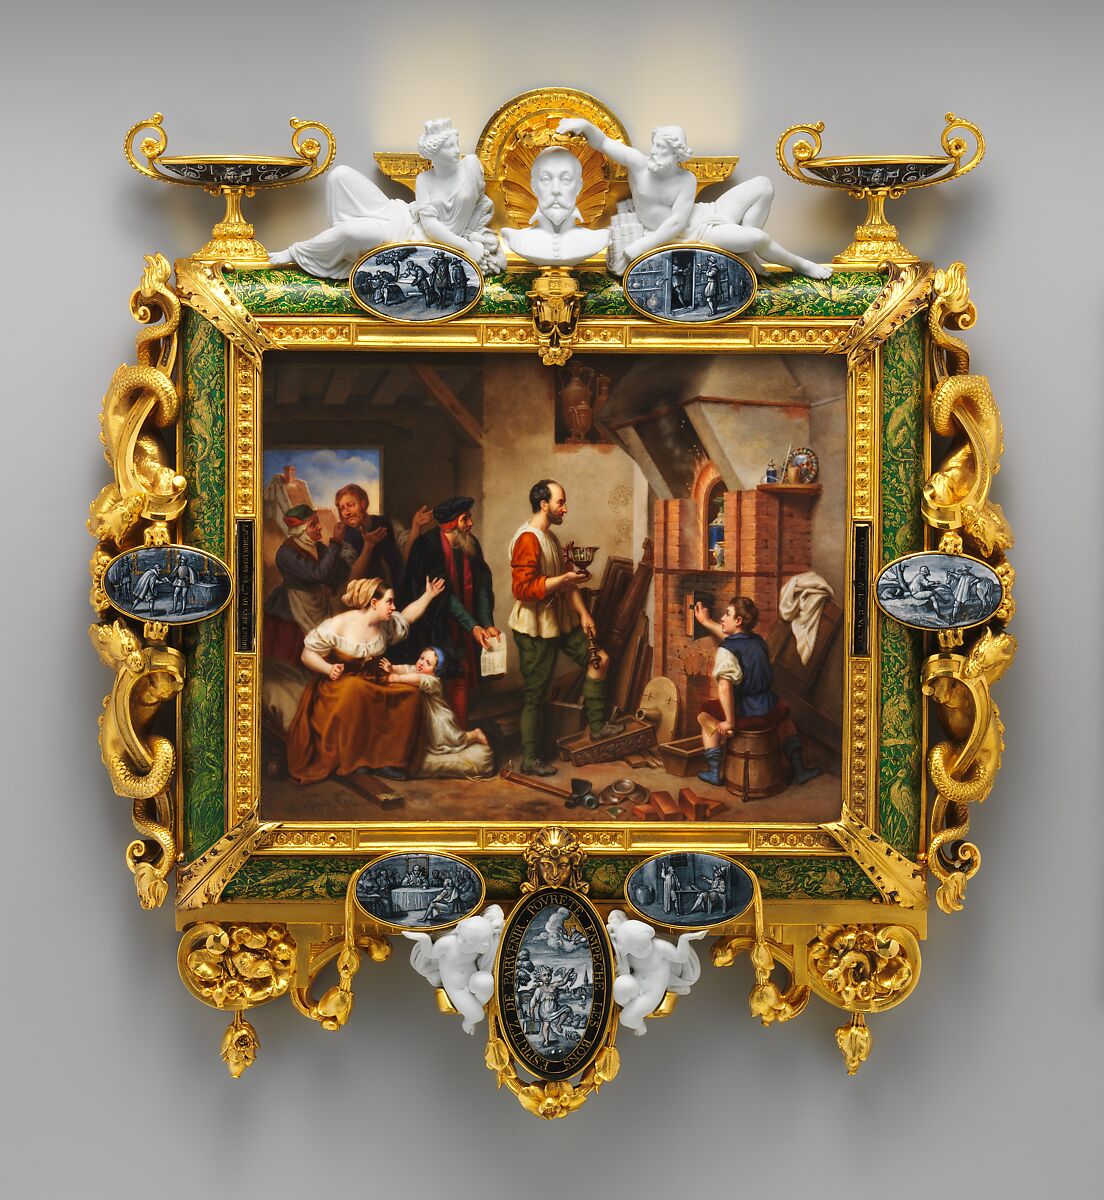 Plaque depicting Bernard Palissy, Sèvres Manufactory (French, 1740–present), Hard-paste porcelain decorated in polychrome enamels; gilt-bronze, polychrome enamel, biscuit-porcelain frame, French, Sèvres 